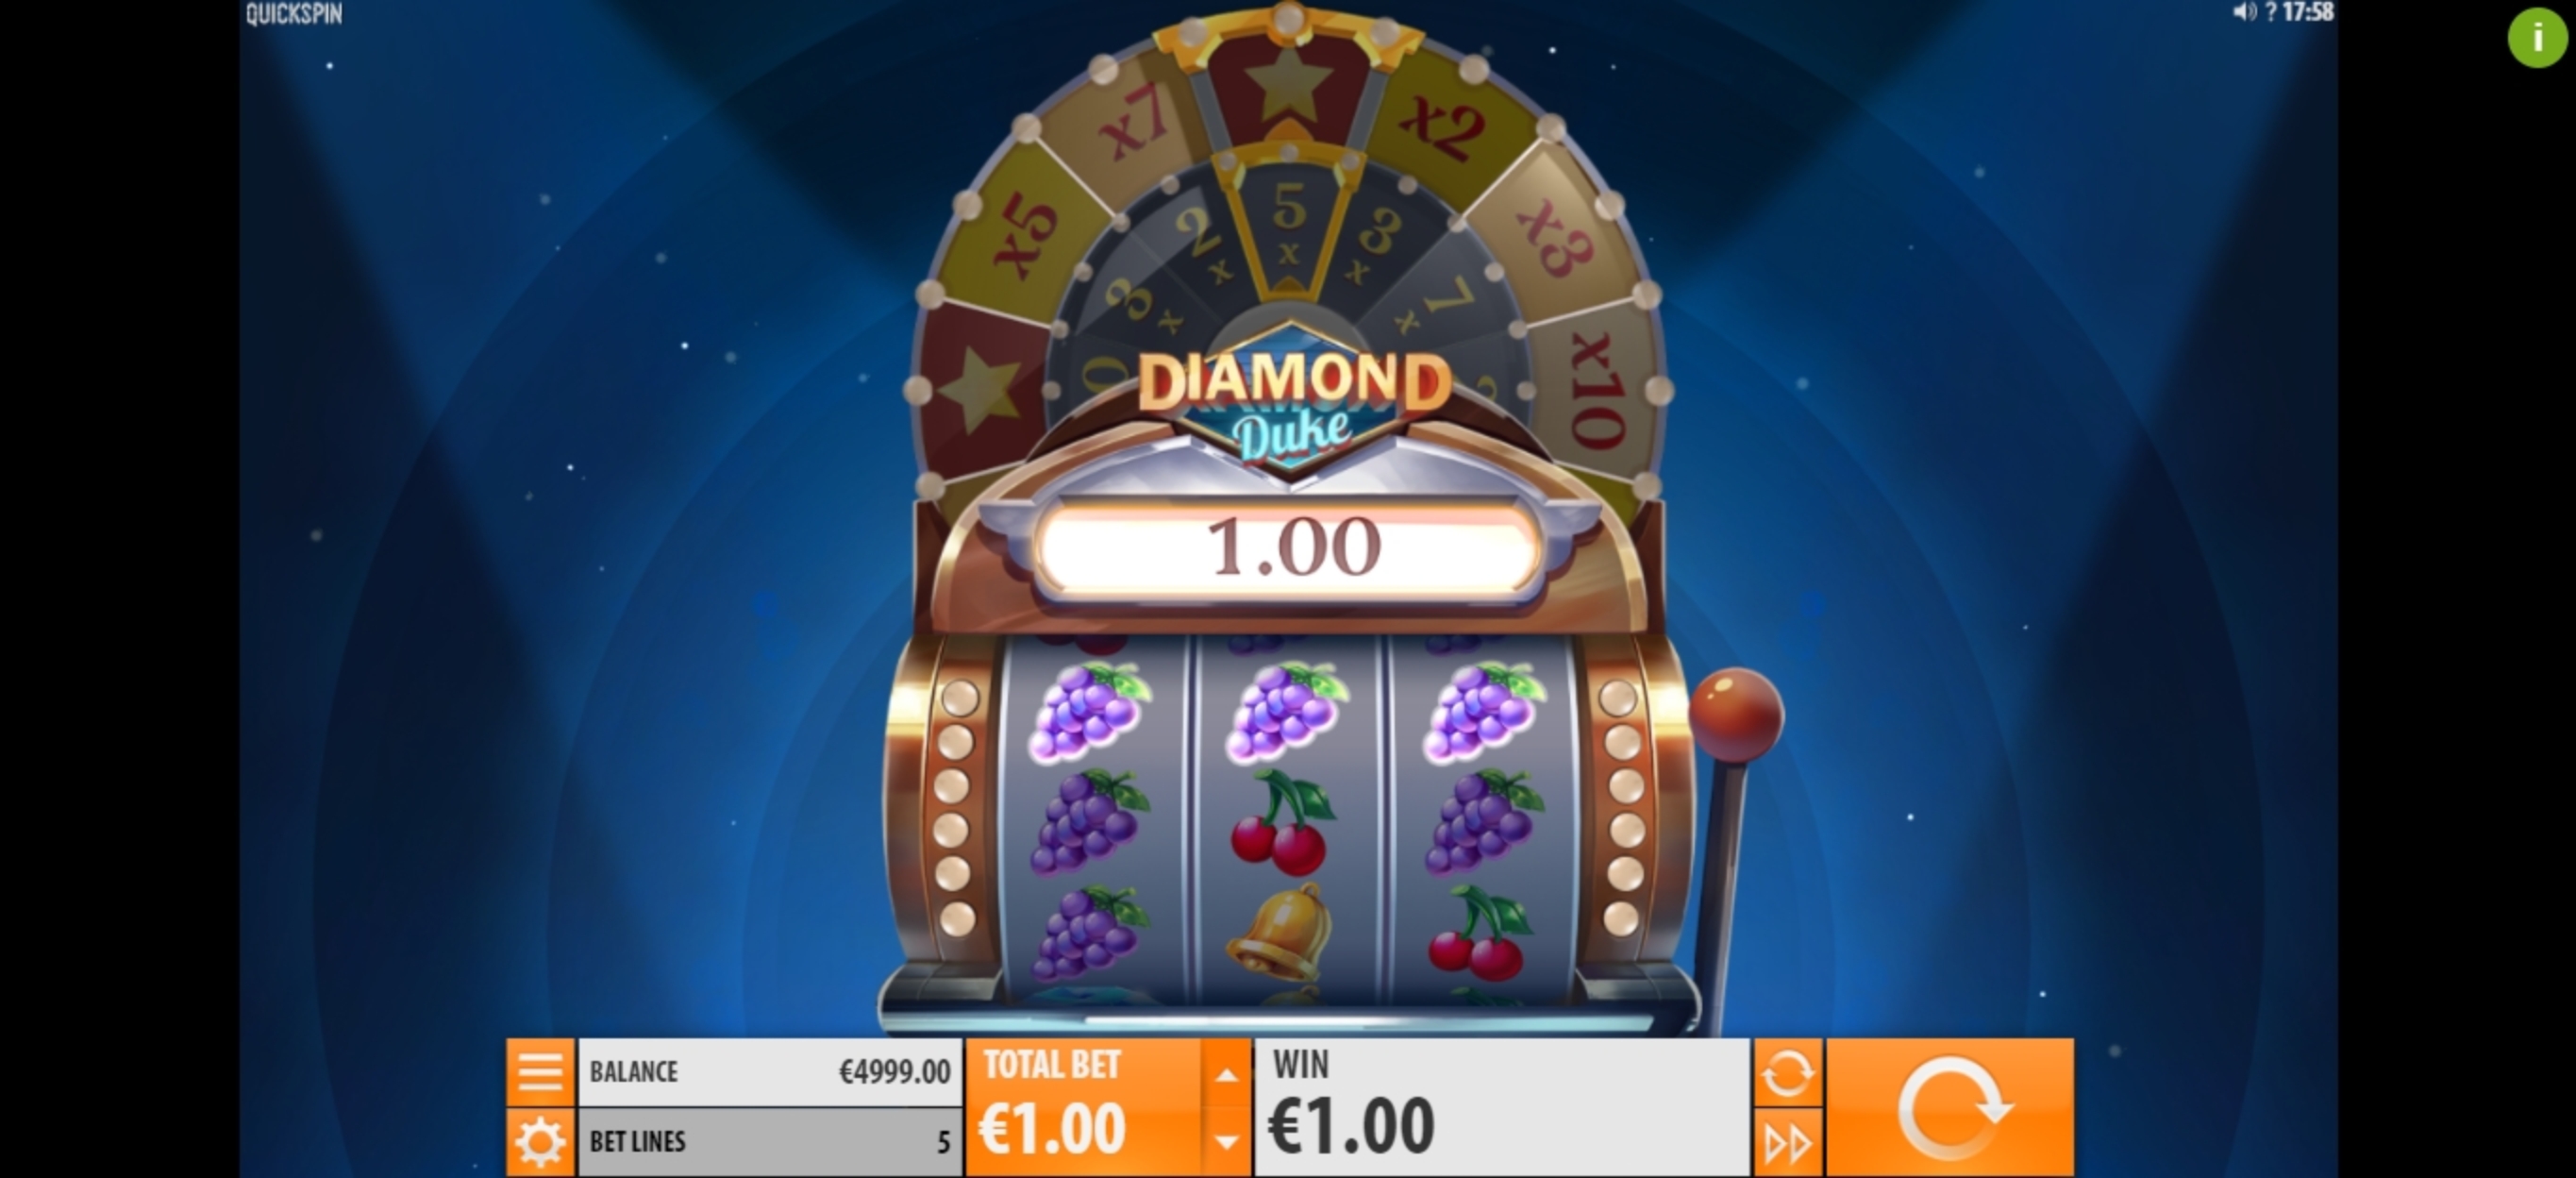 Win Money in Diamond Duke Free Slot Game by Quickspin